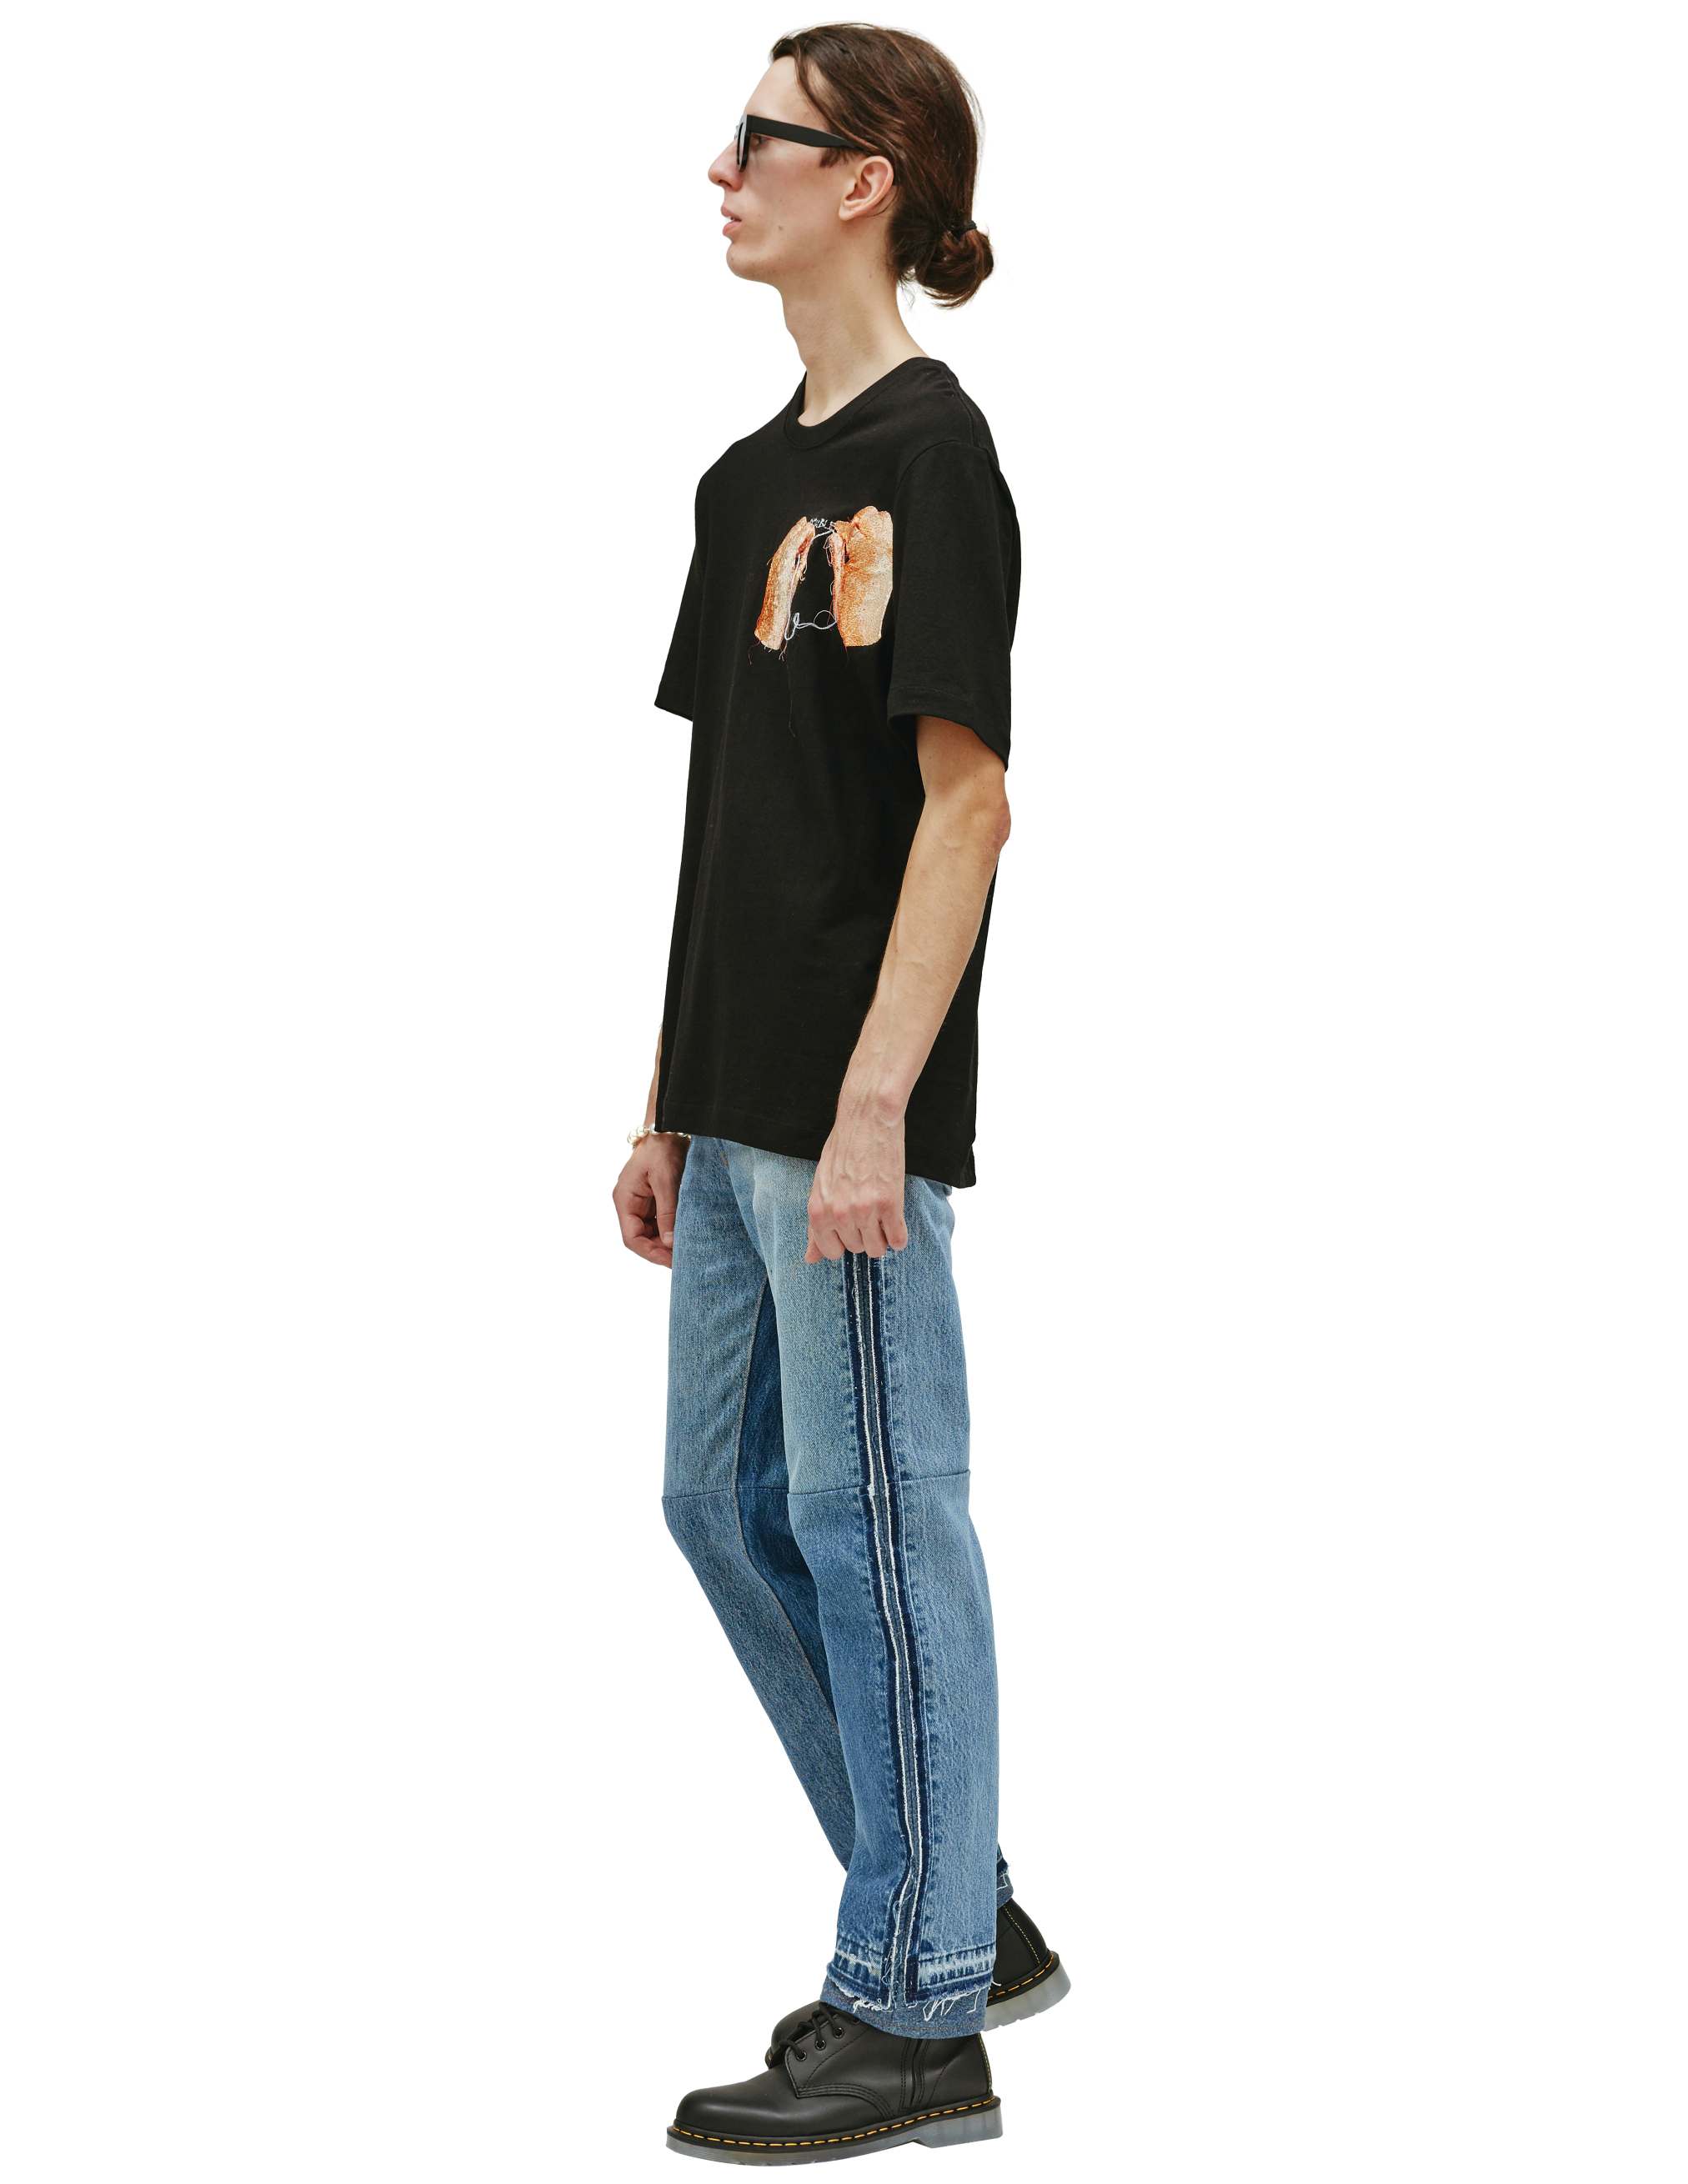 Хлопковая футболка с вышивкой Doublet 22AW33CS237/BLACK, размер M;L 22AW33CS237/BLACK - фото 2